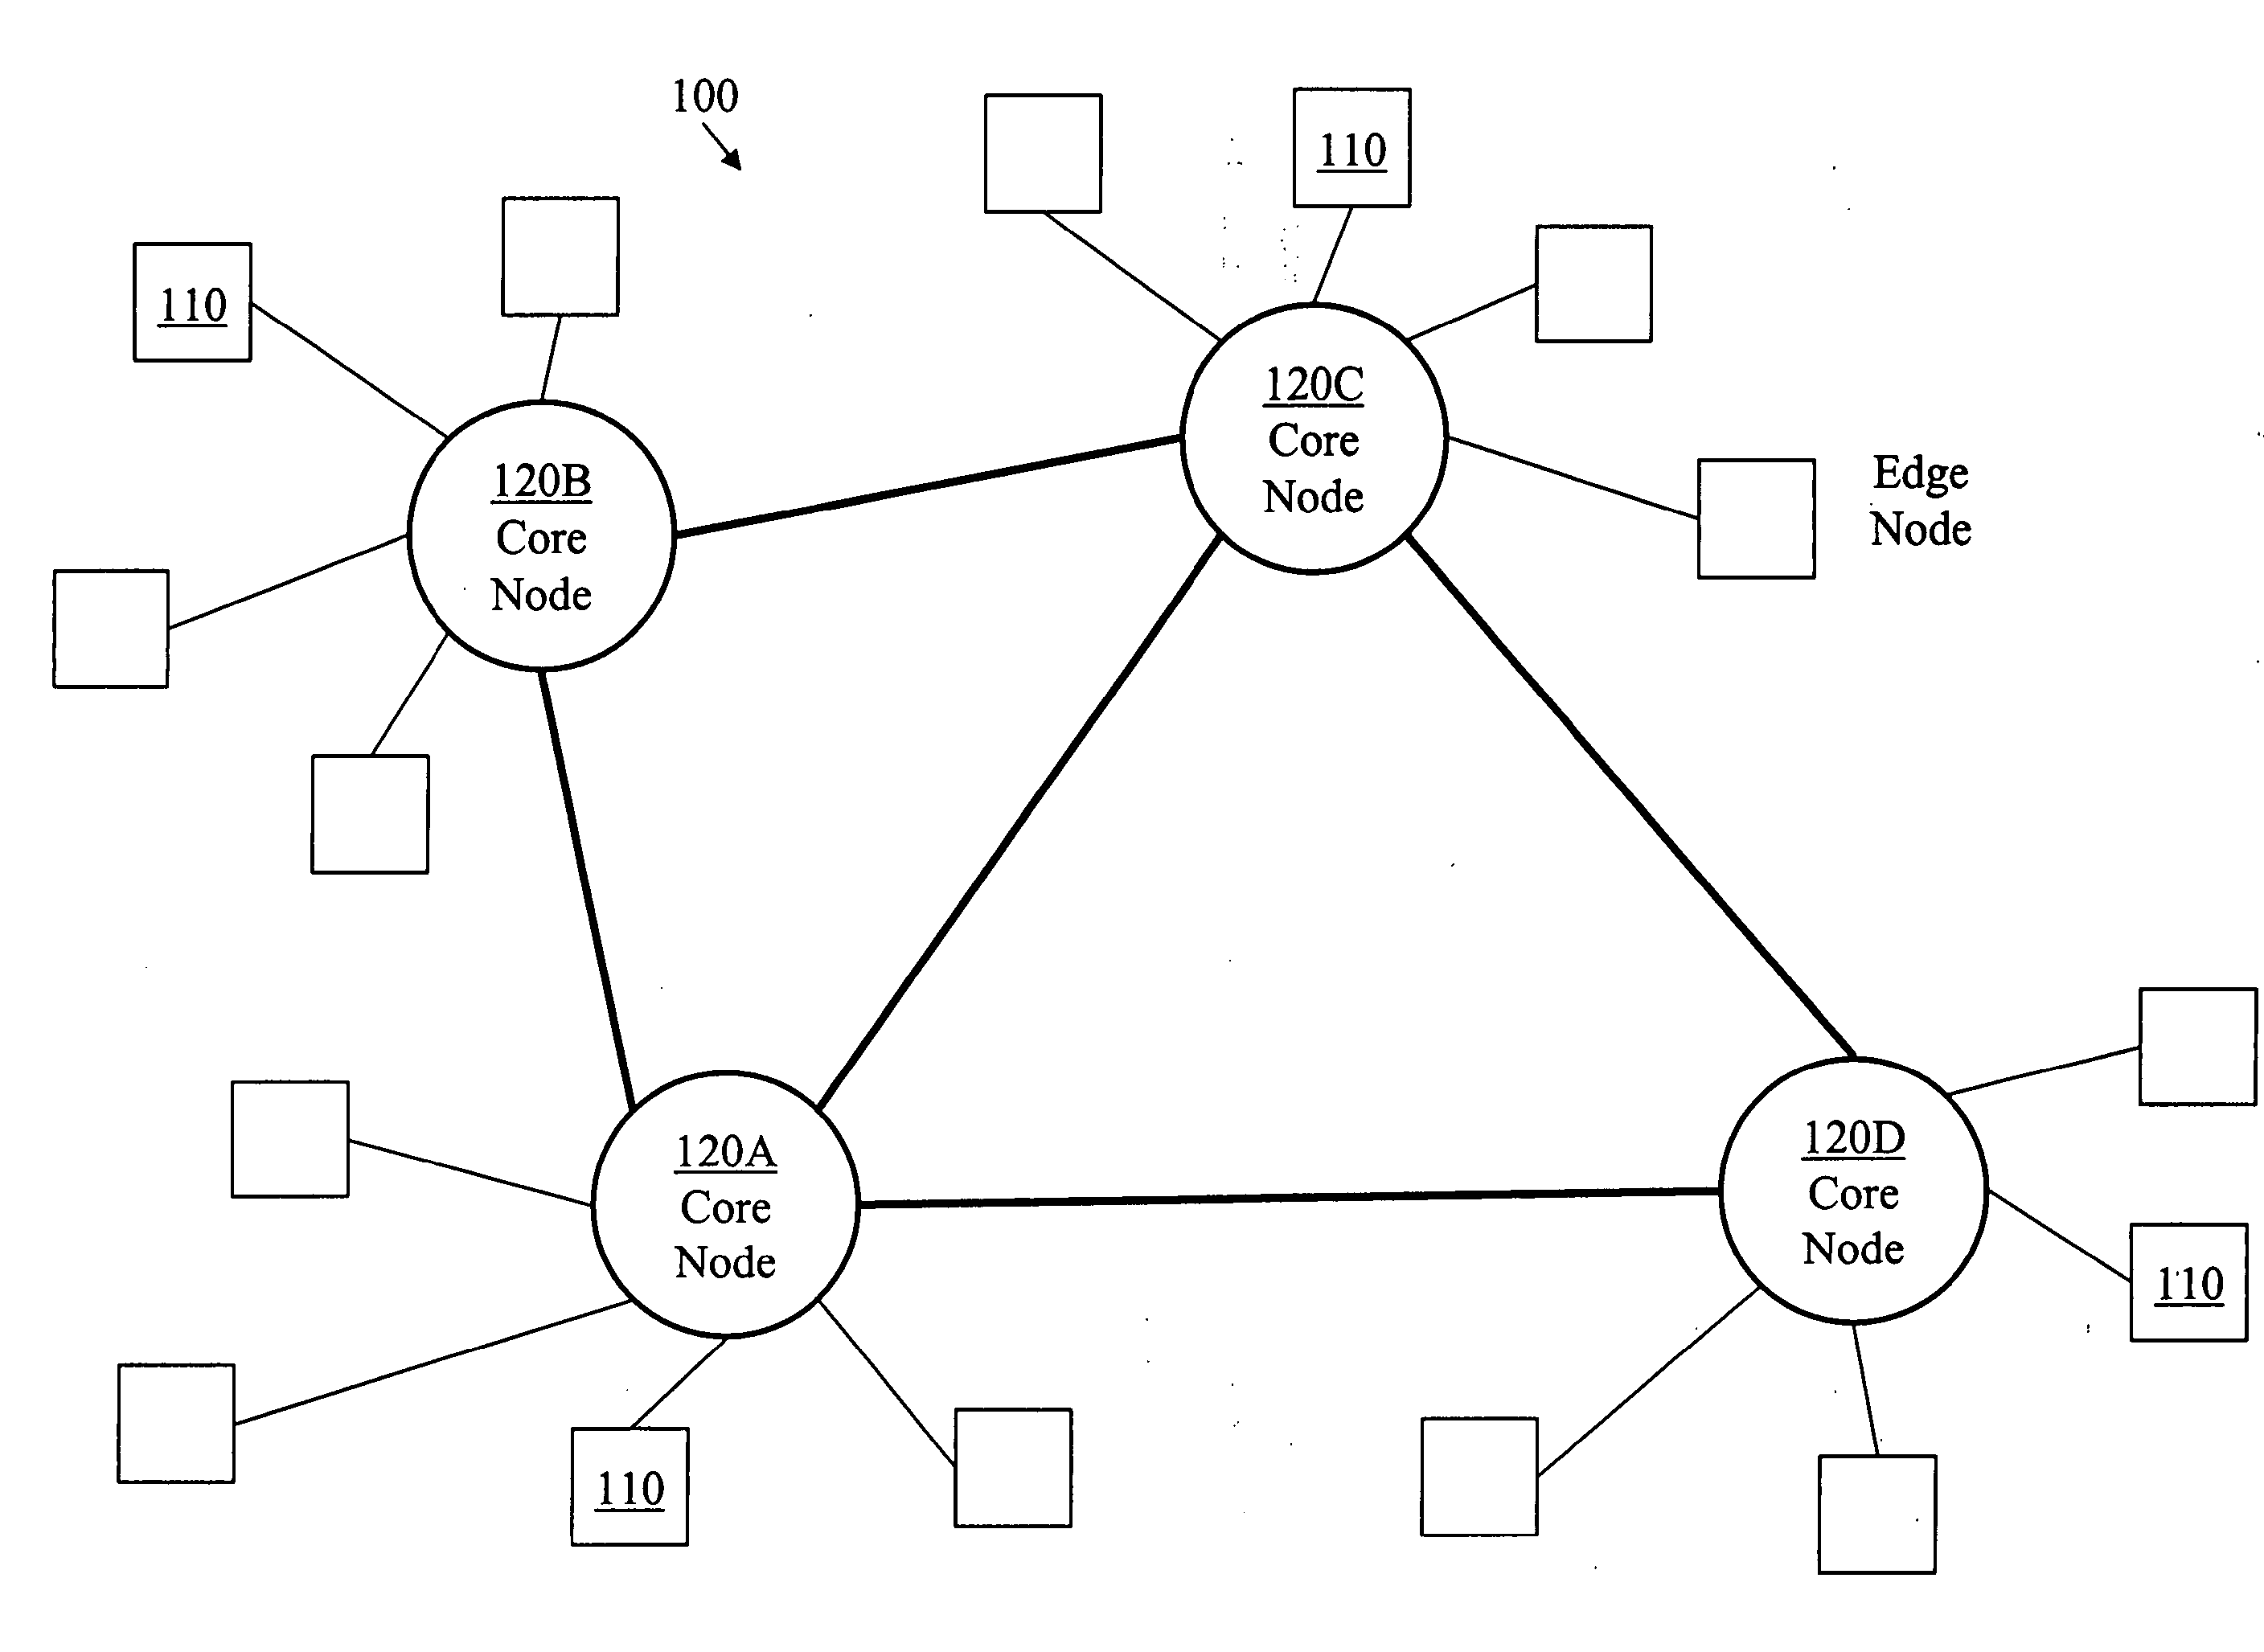 Virtual Burst-Switching Networks